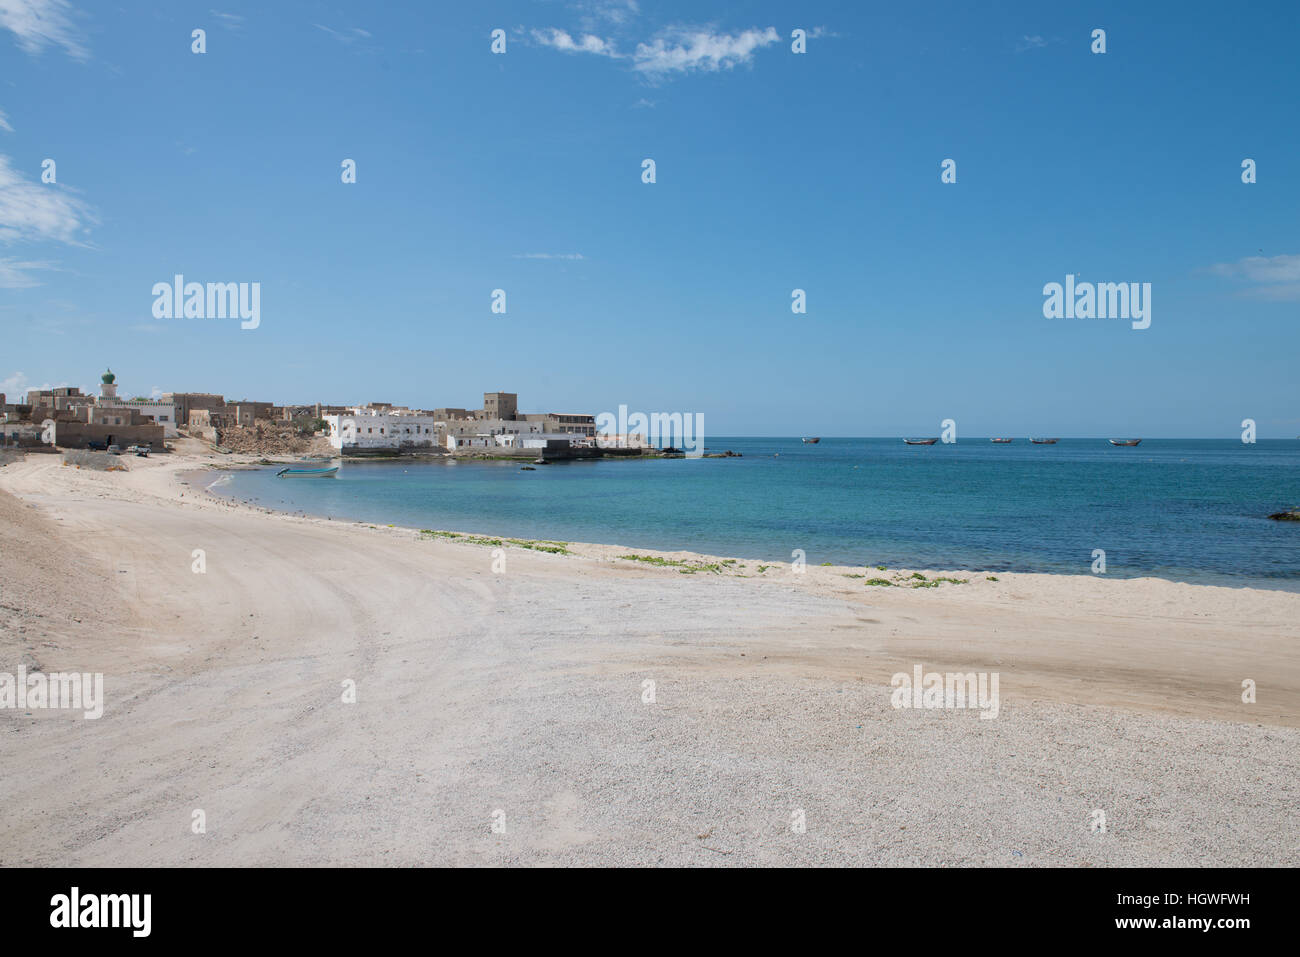 Coastal village, Gulf of Oman, Oman Stock Photo